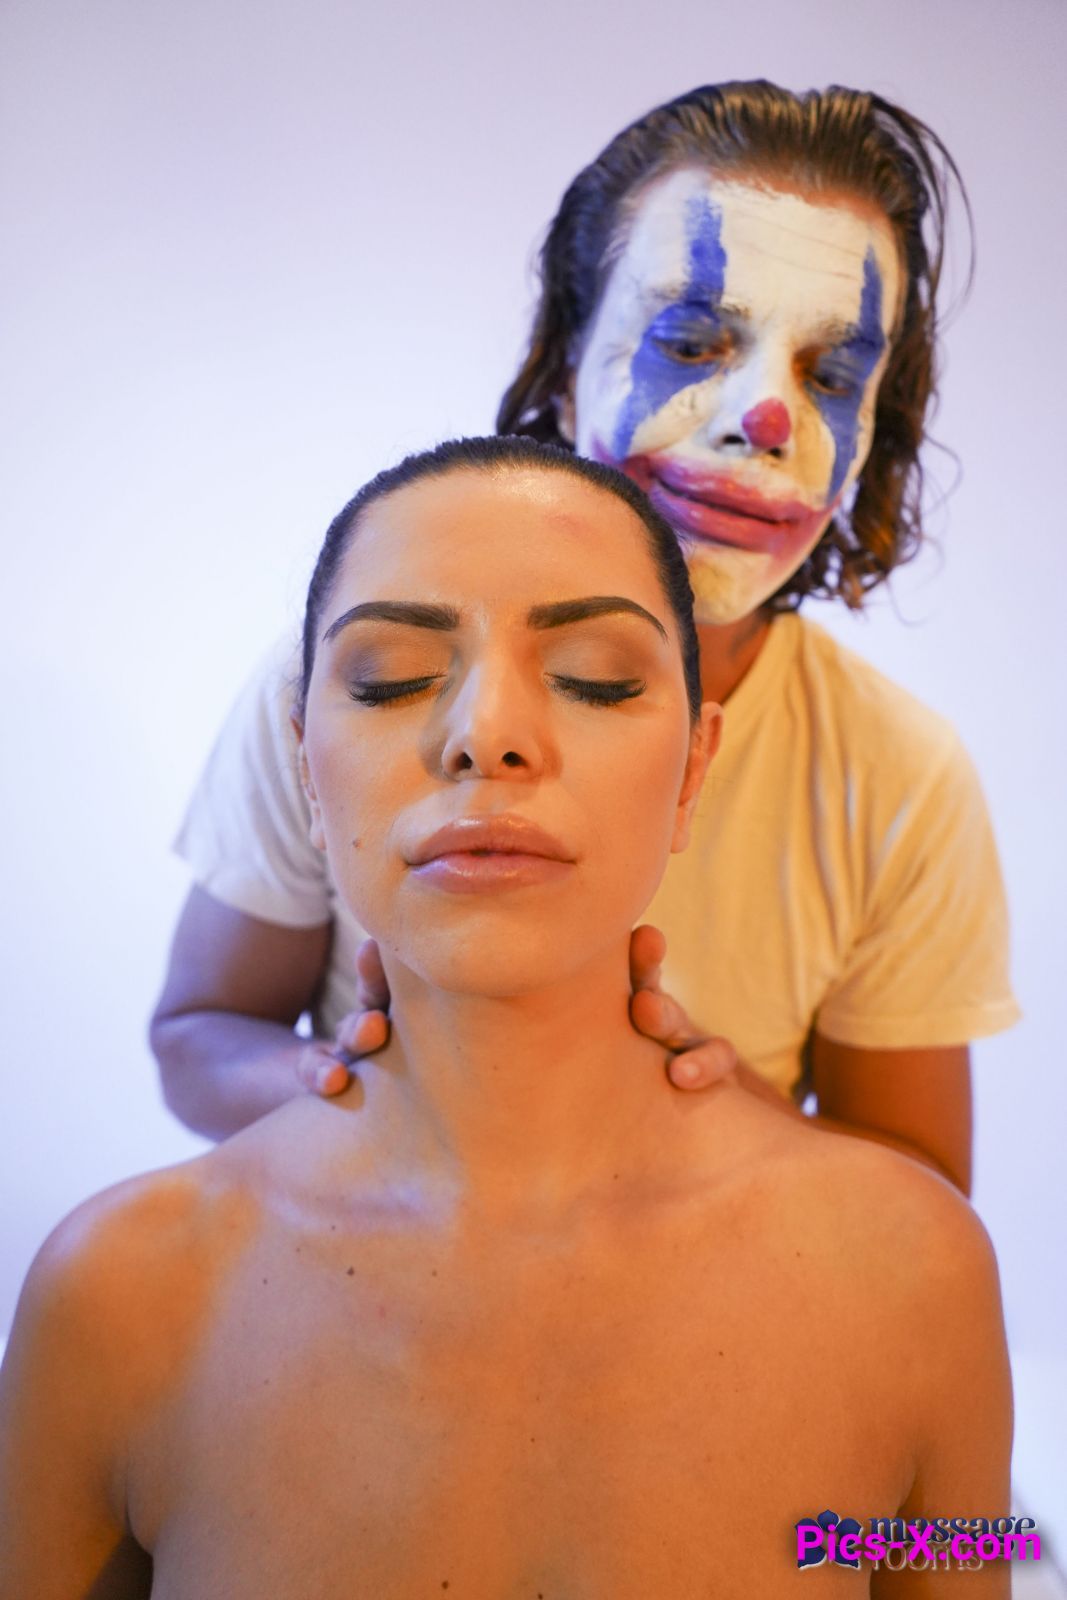 Joker gives wonder woman a massage - Massage Rooms - Image 7